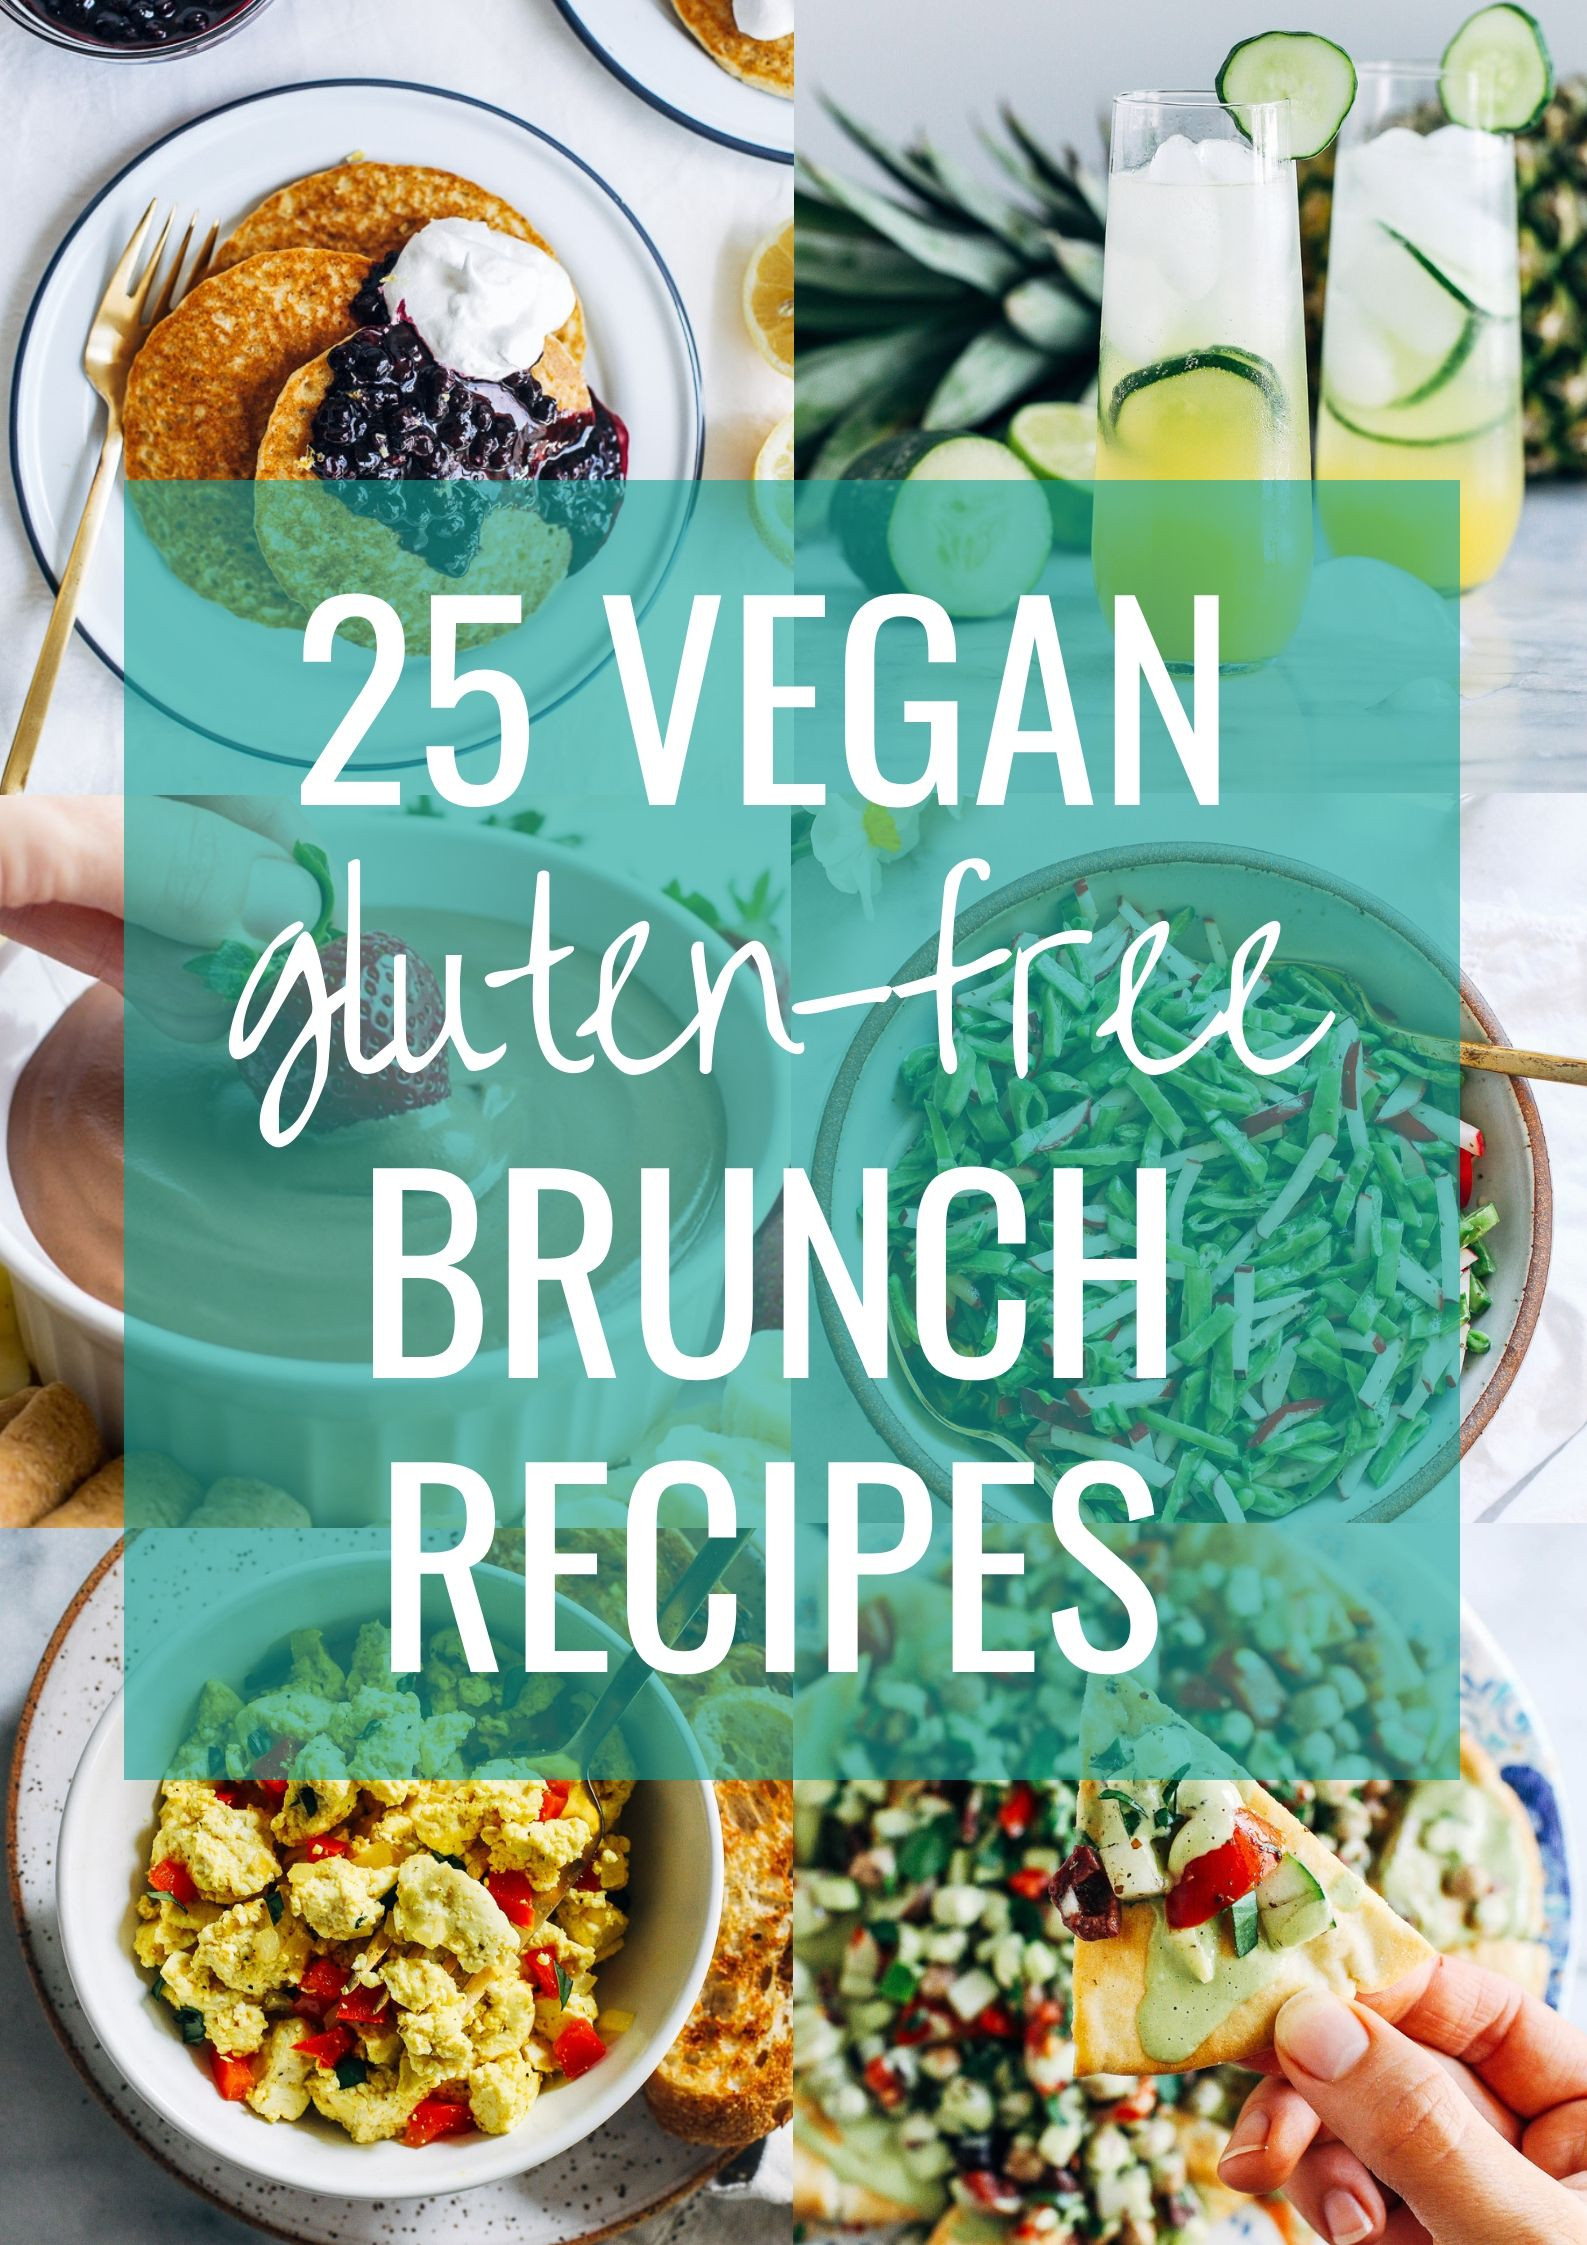 Vegan Gluten Free Brunch Recipes
 25 Vegan Gluten free Brunch Recipes With images